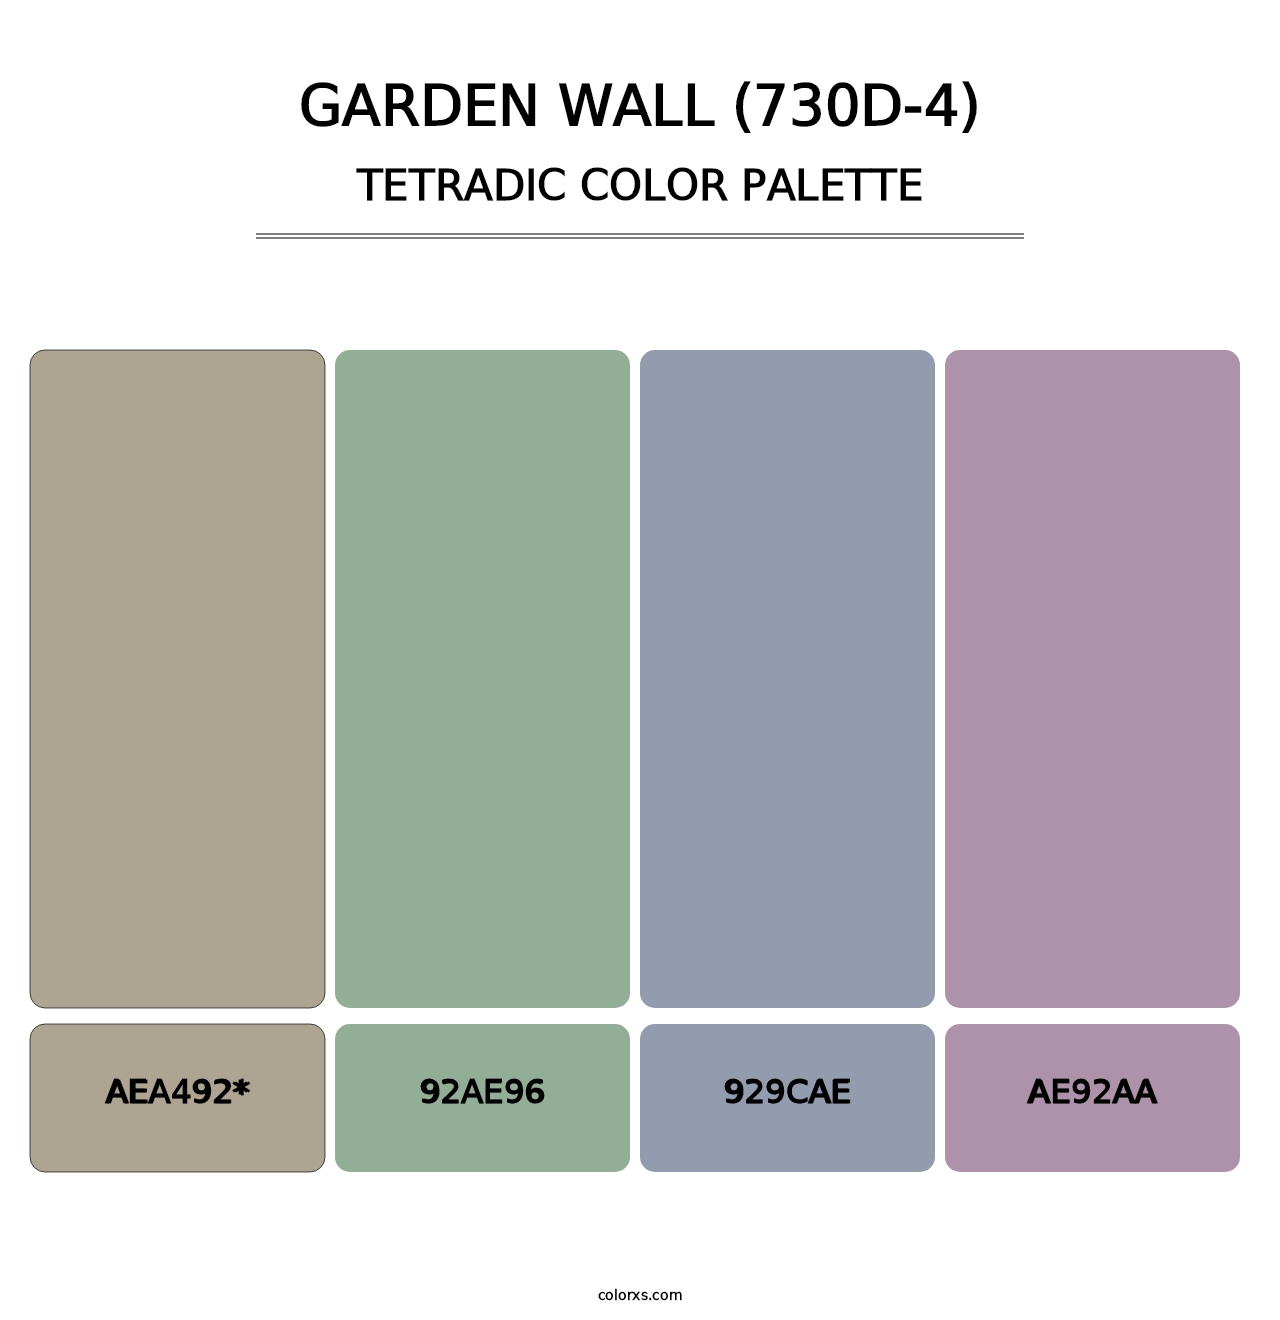 Garden Wall (730D-4) - Tetradic Color Palette